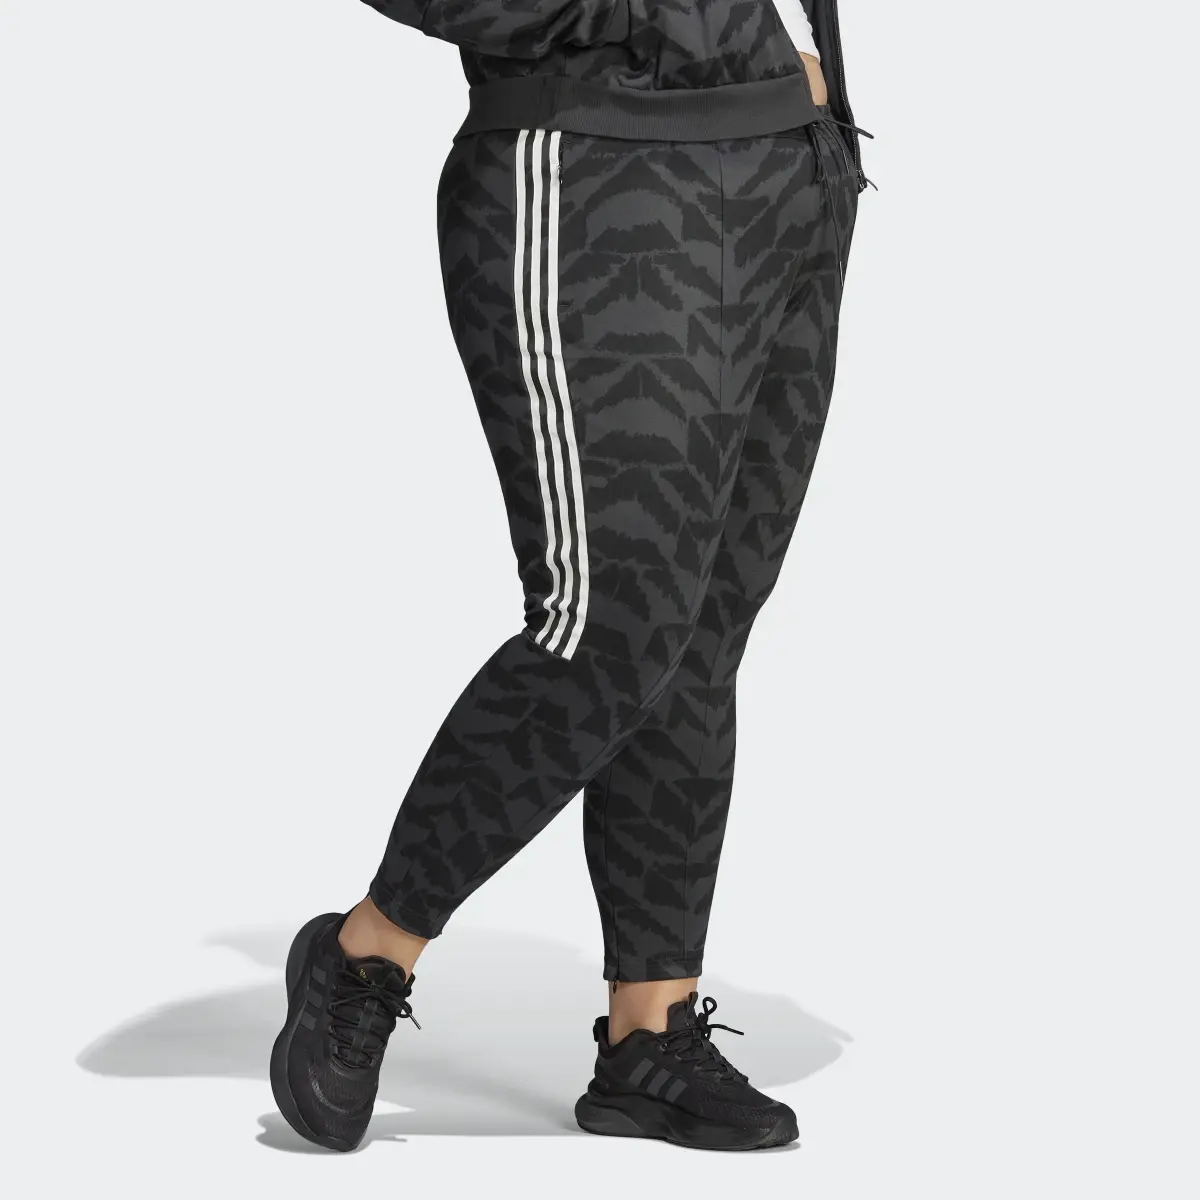 Adidas Tiro Suit Up Lifestyle Trainingshose – Große Größen. 3